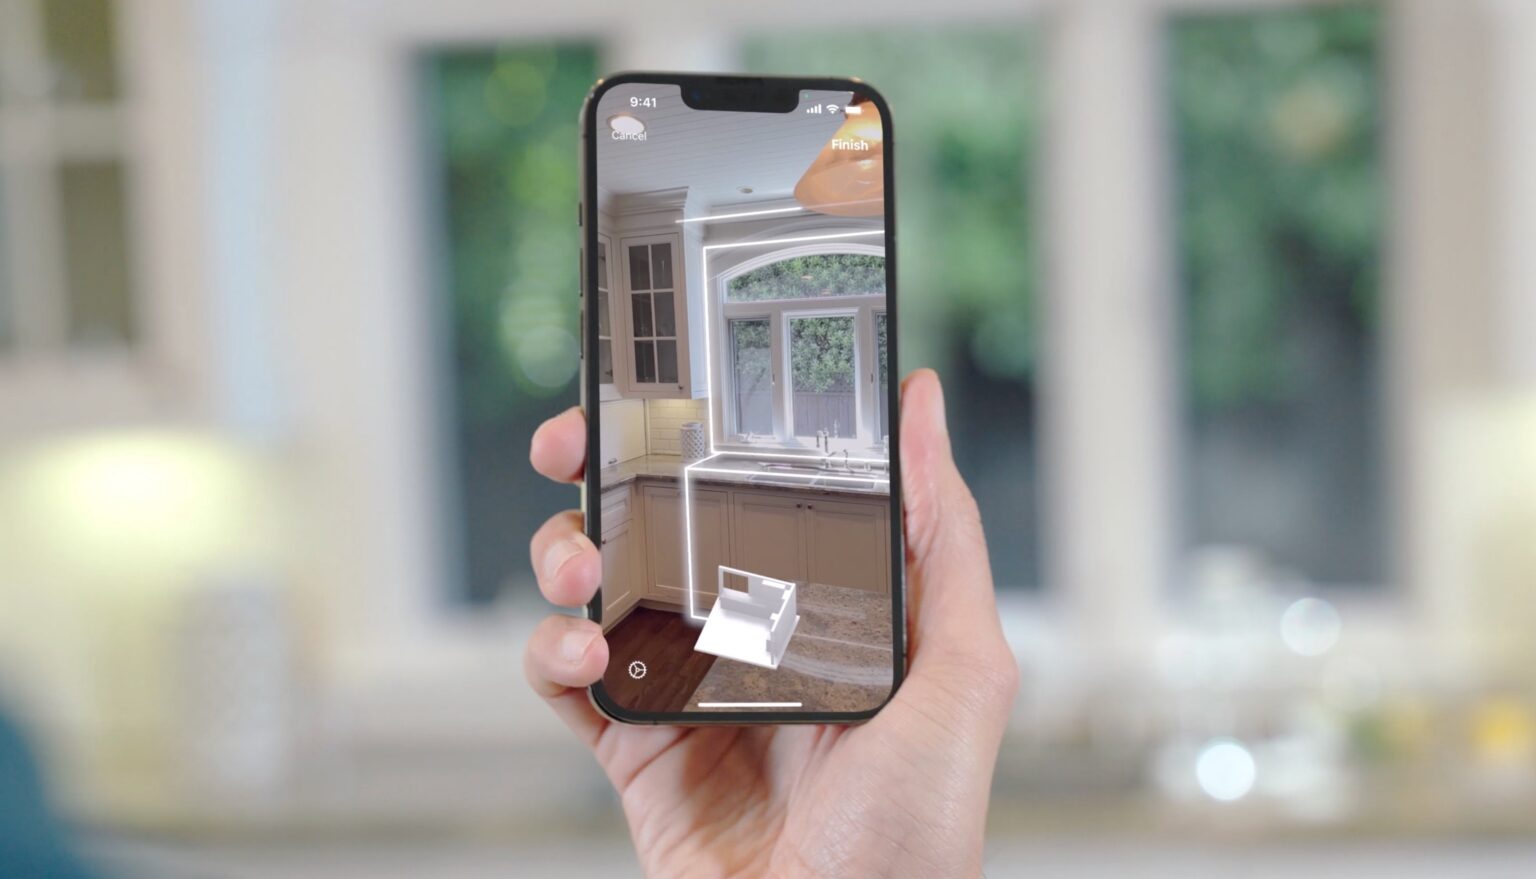 iOS 16’s RoomPlan captures 3D ground plans in seconds